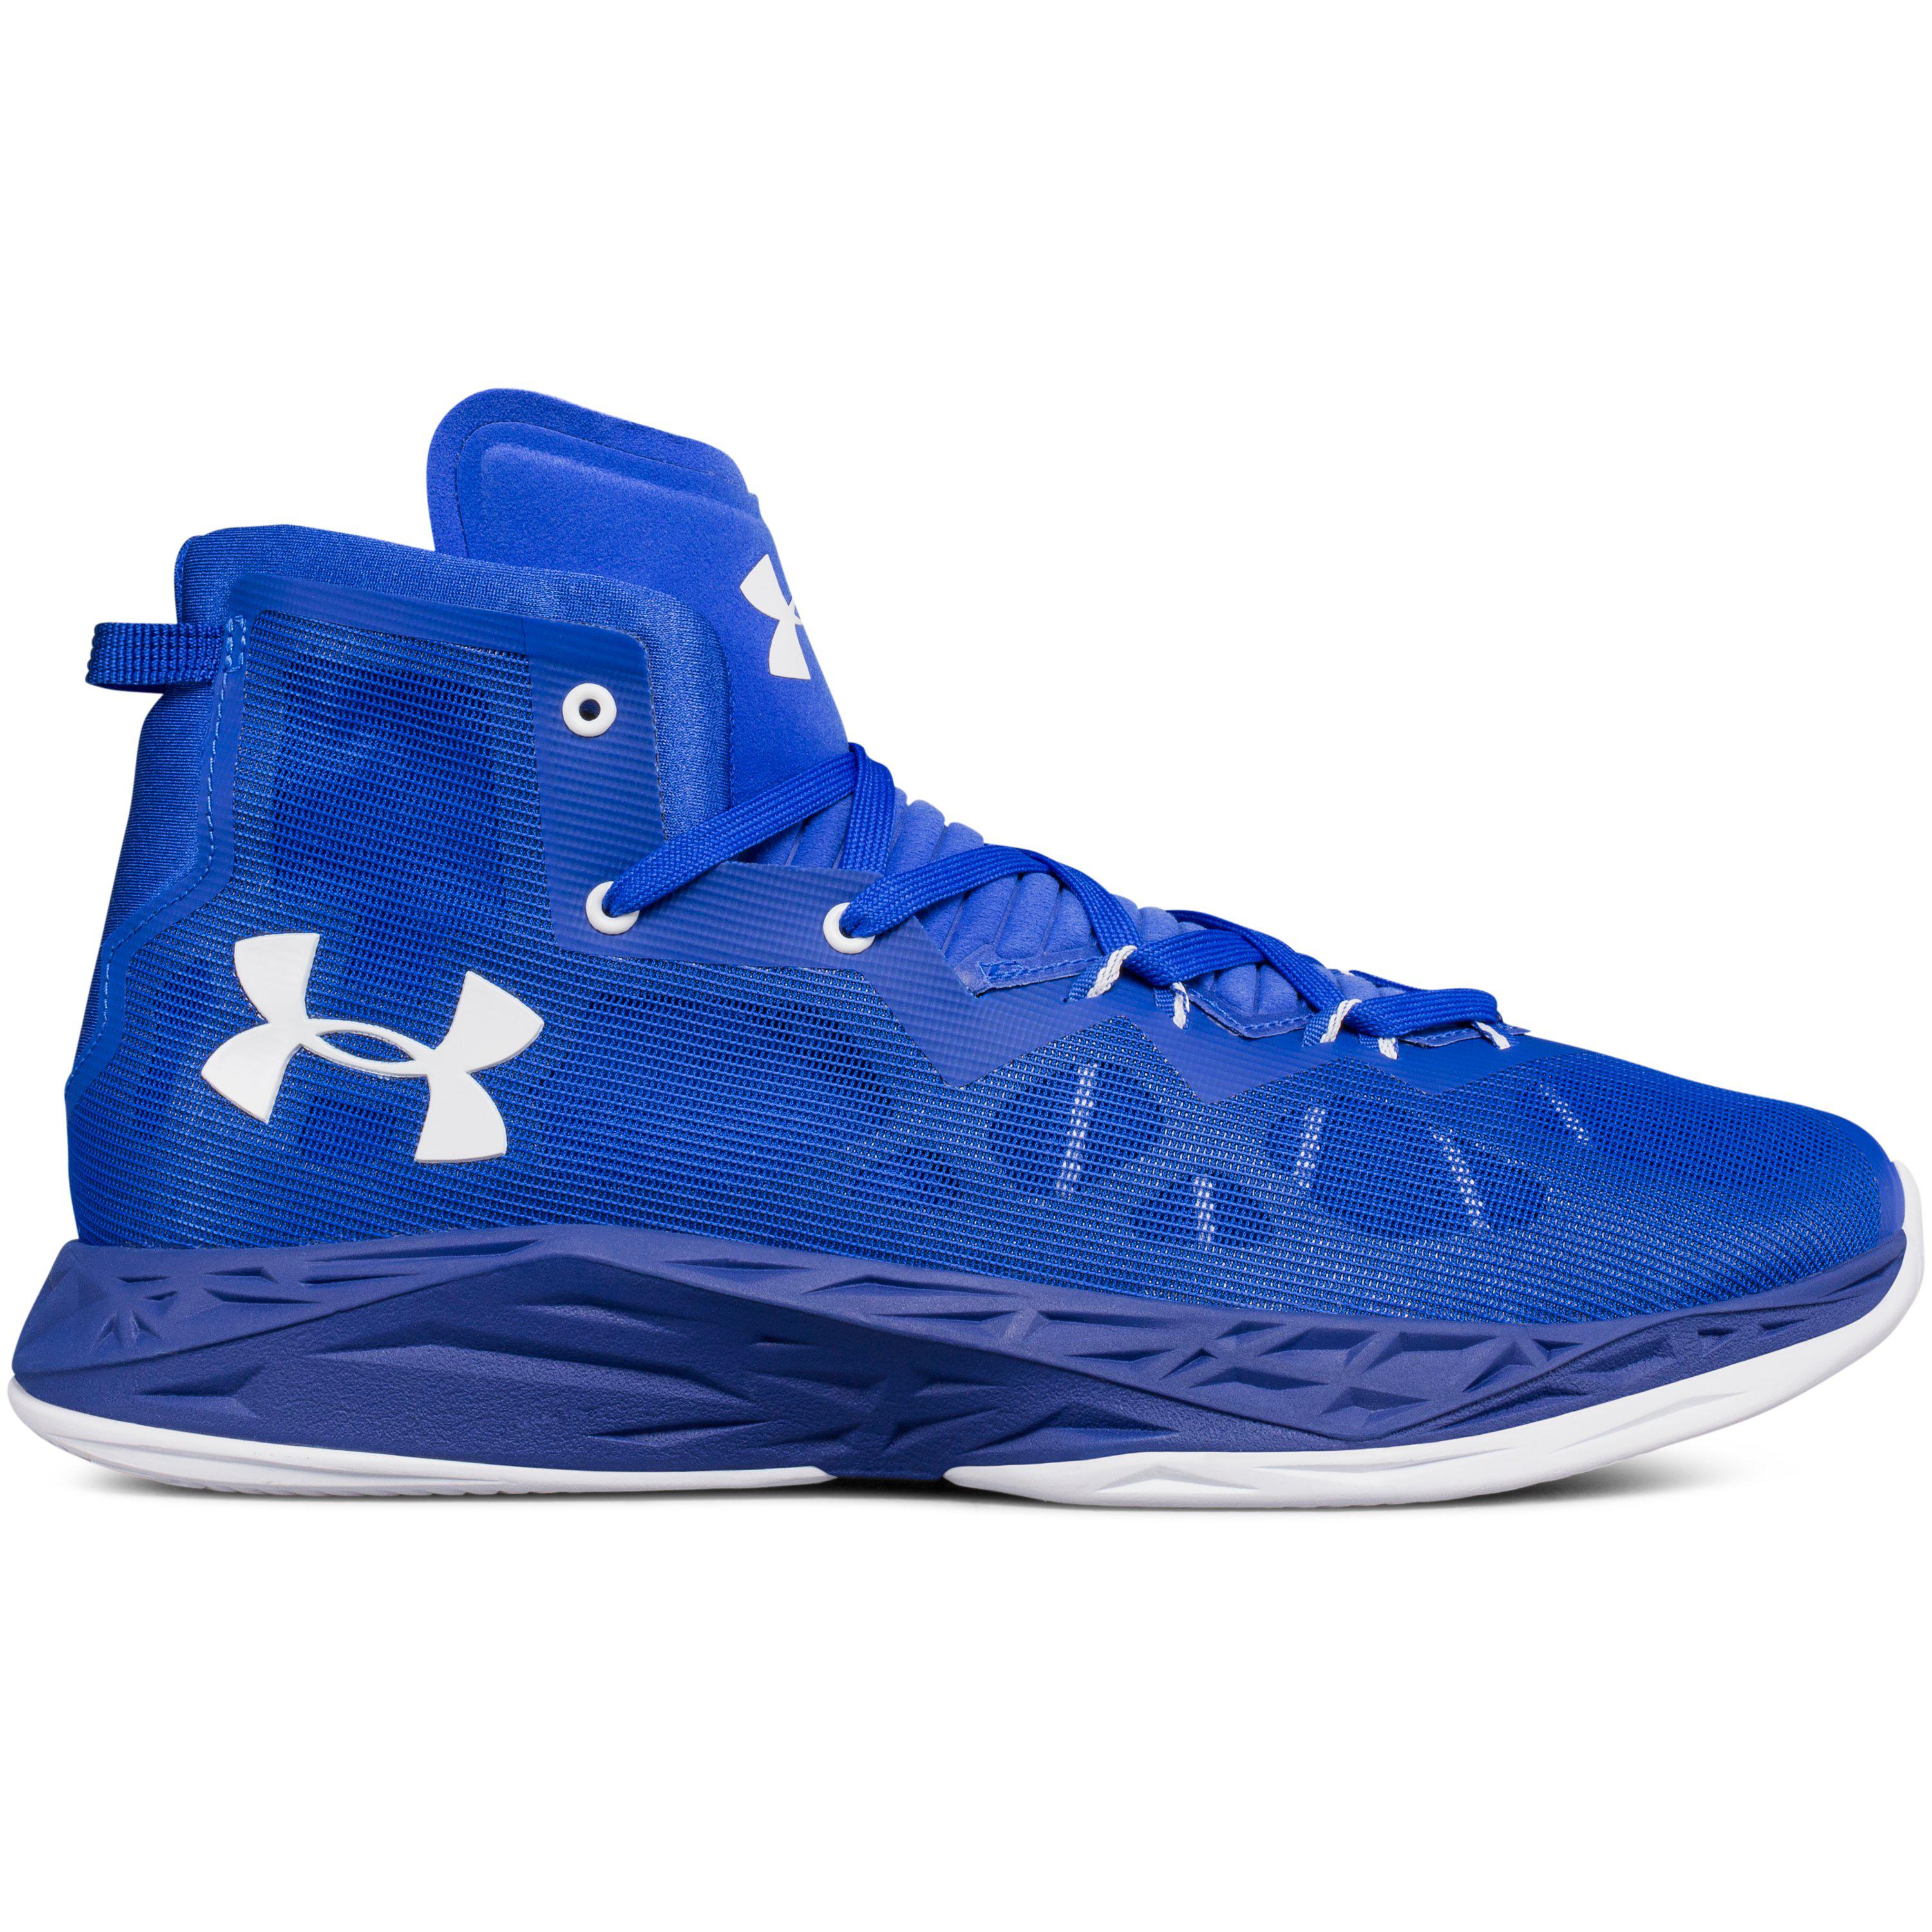 Under Armour Men's Ua Lightning 4 Basketball Shoes in Blue for Men Lyst